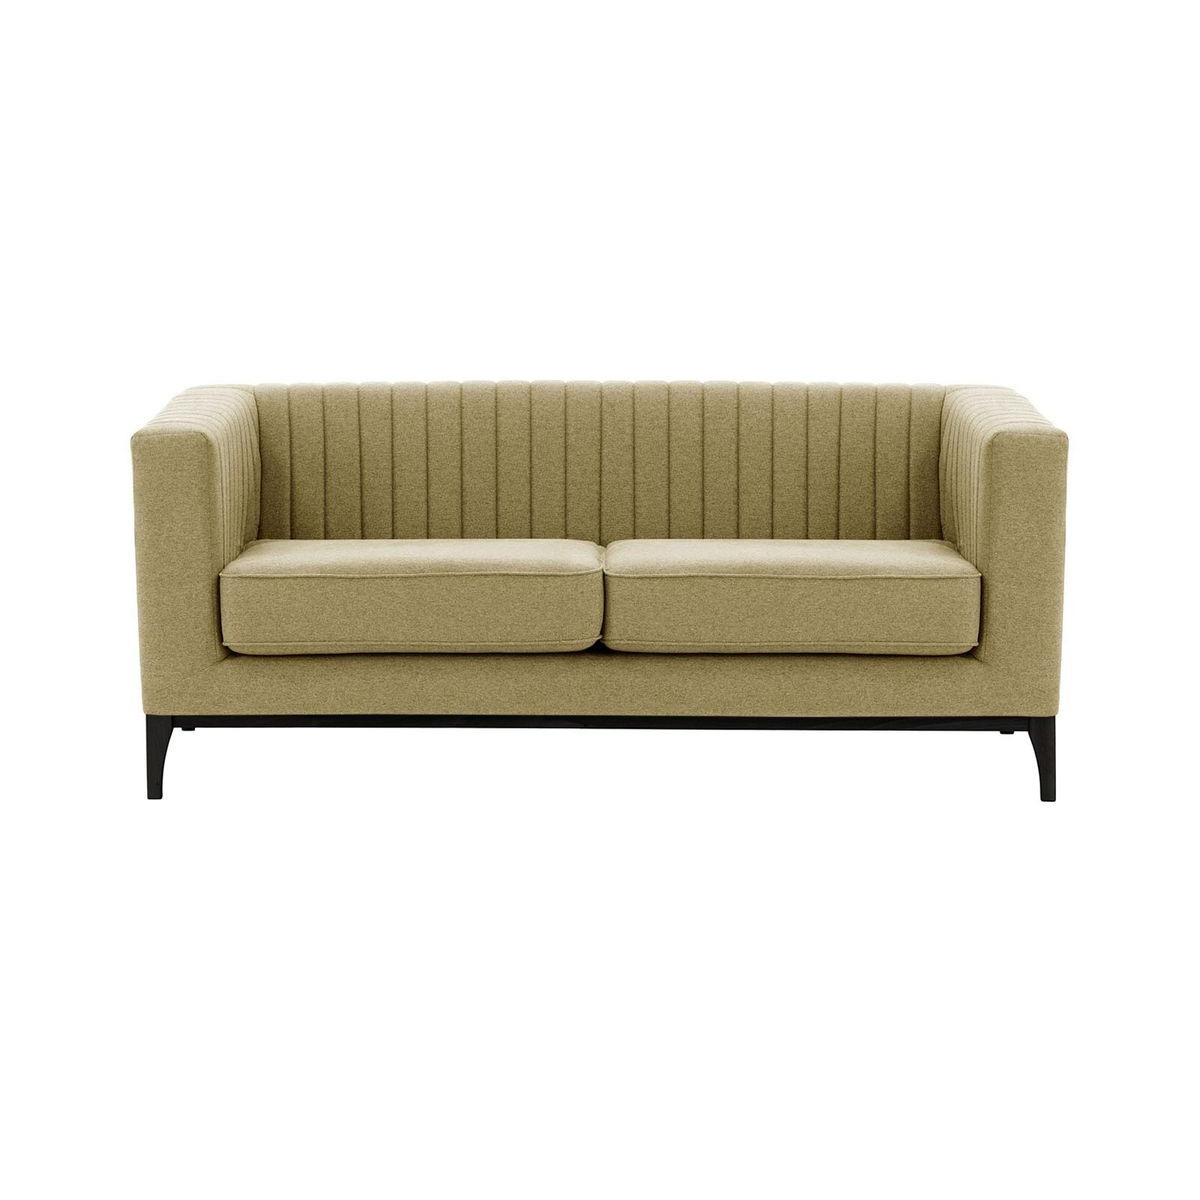 Slender Wood 2 Seater Sofa, beige, Leg colour: black - image 1